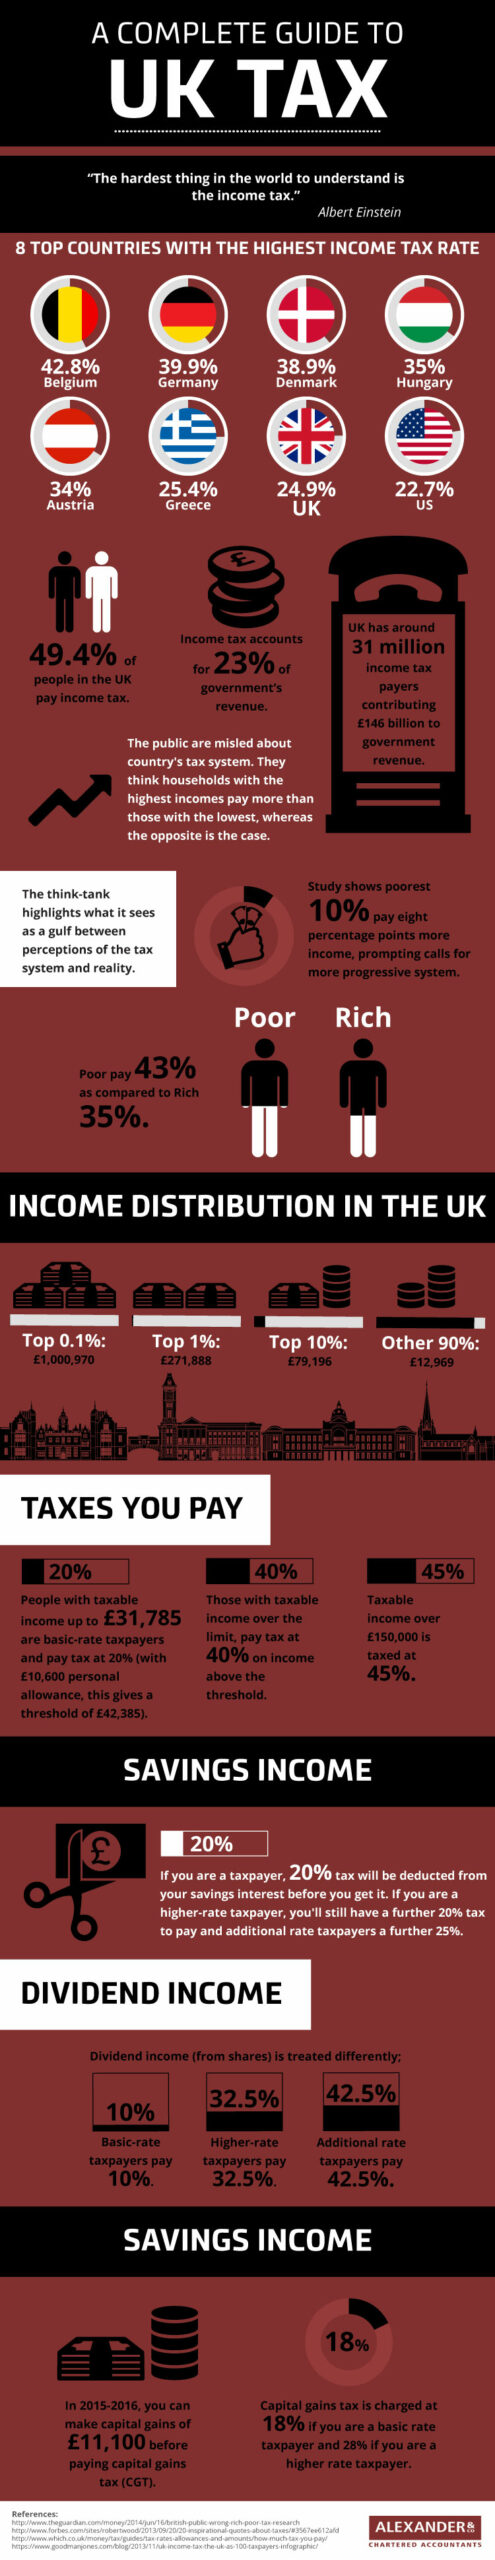 UK tax system